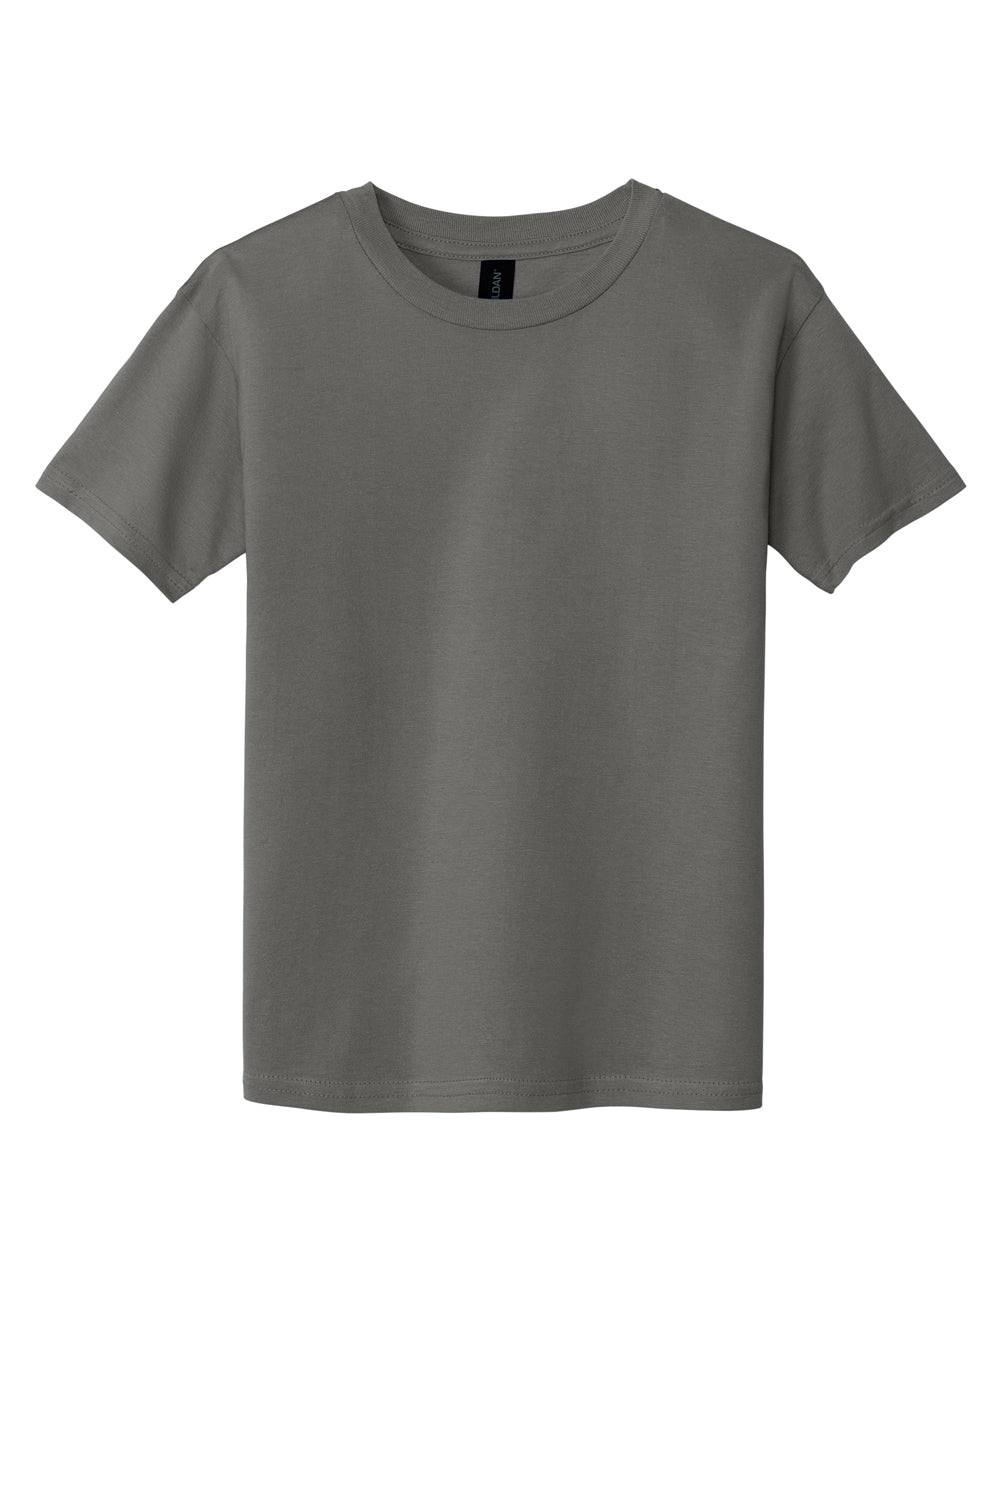 Gildan Youth Softstyle Short Sleeve Crewneck T-Shirt Charcoal Grey Flat Front